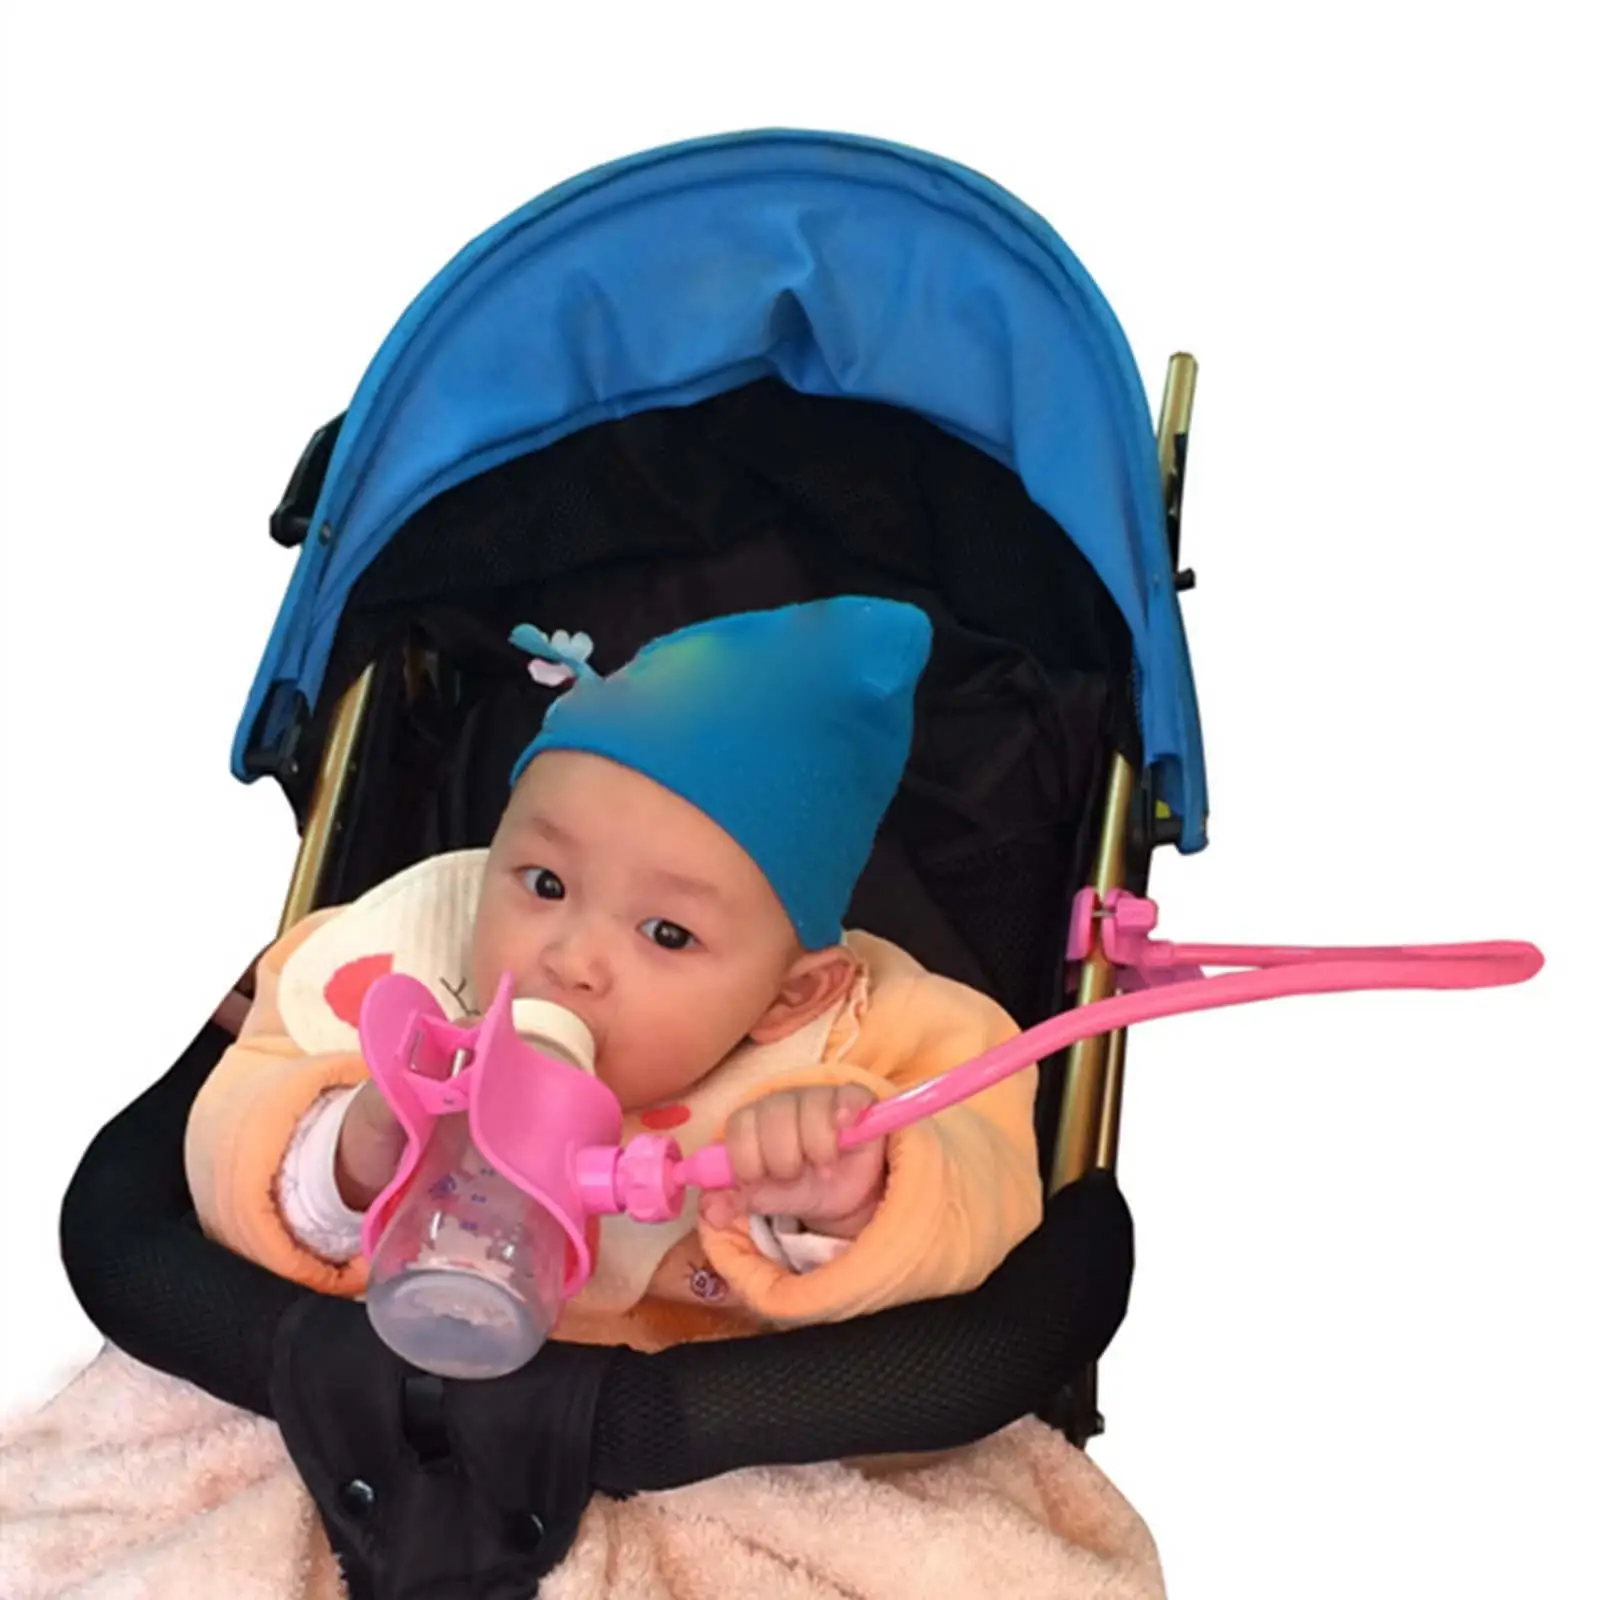 Adjustable Baby Bottle Holder Hands Free Clamp Feeding Bottle Bracket Durable for Pushchair Baby Bed Stroller Infant Nursing